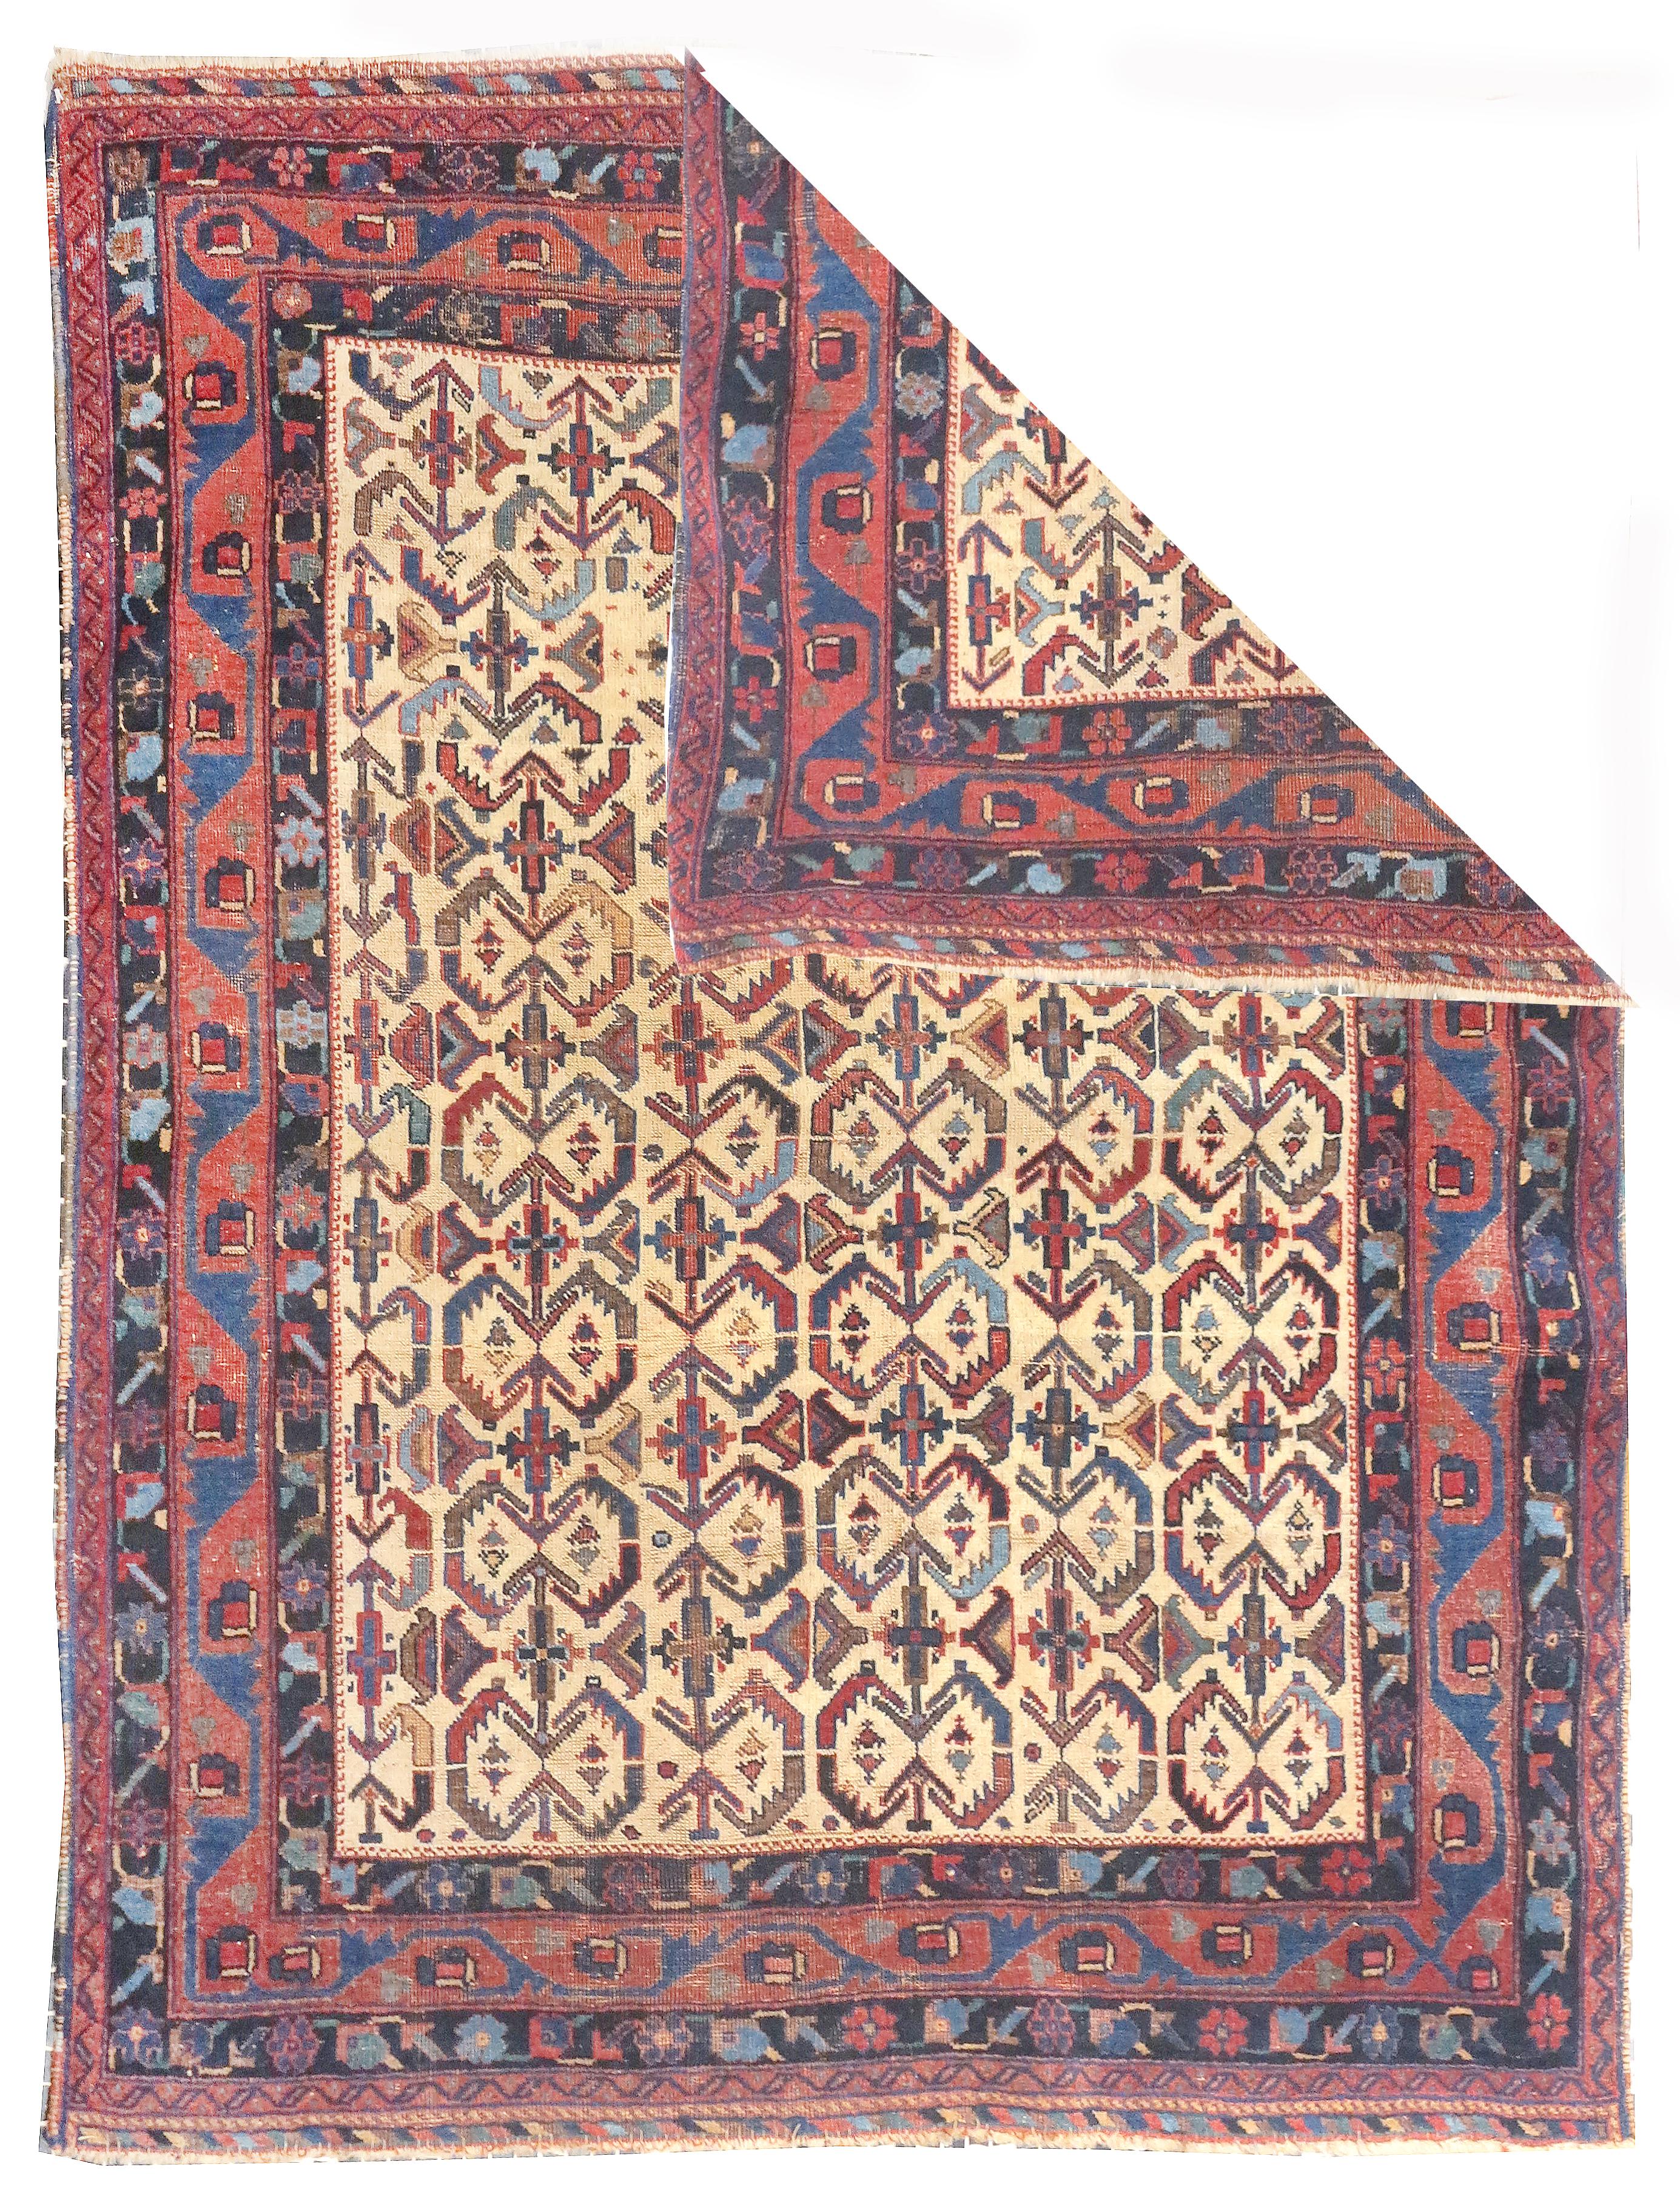 Antique Persian tribal Afshar rug, measures 4'0'' x 4'6''.